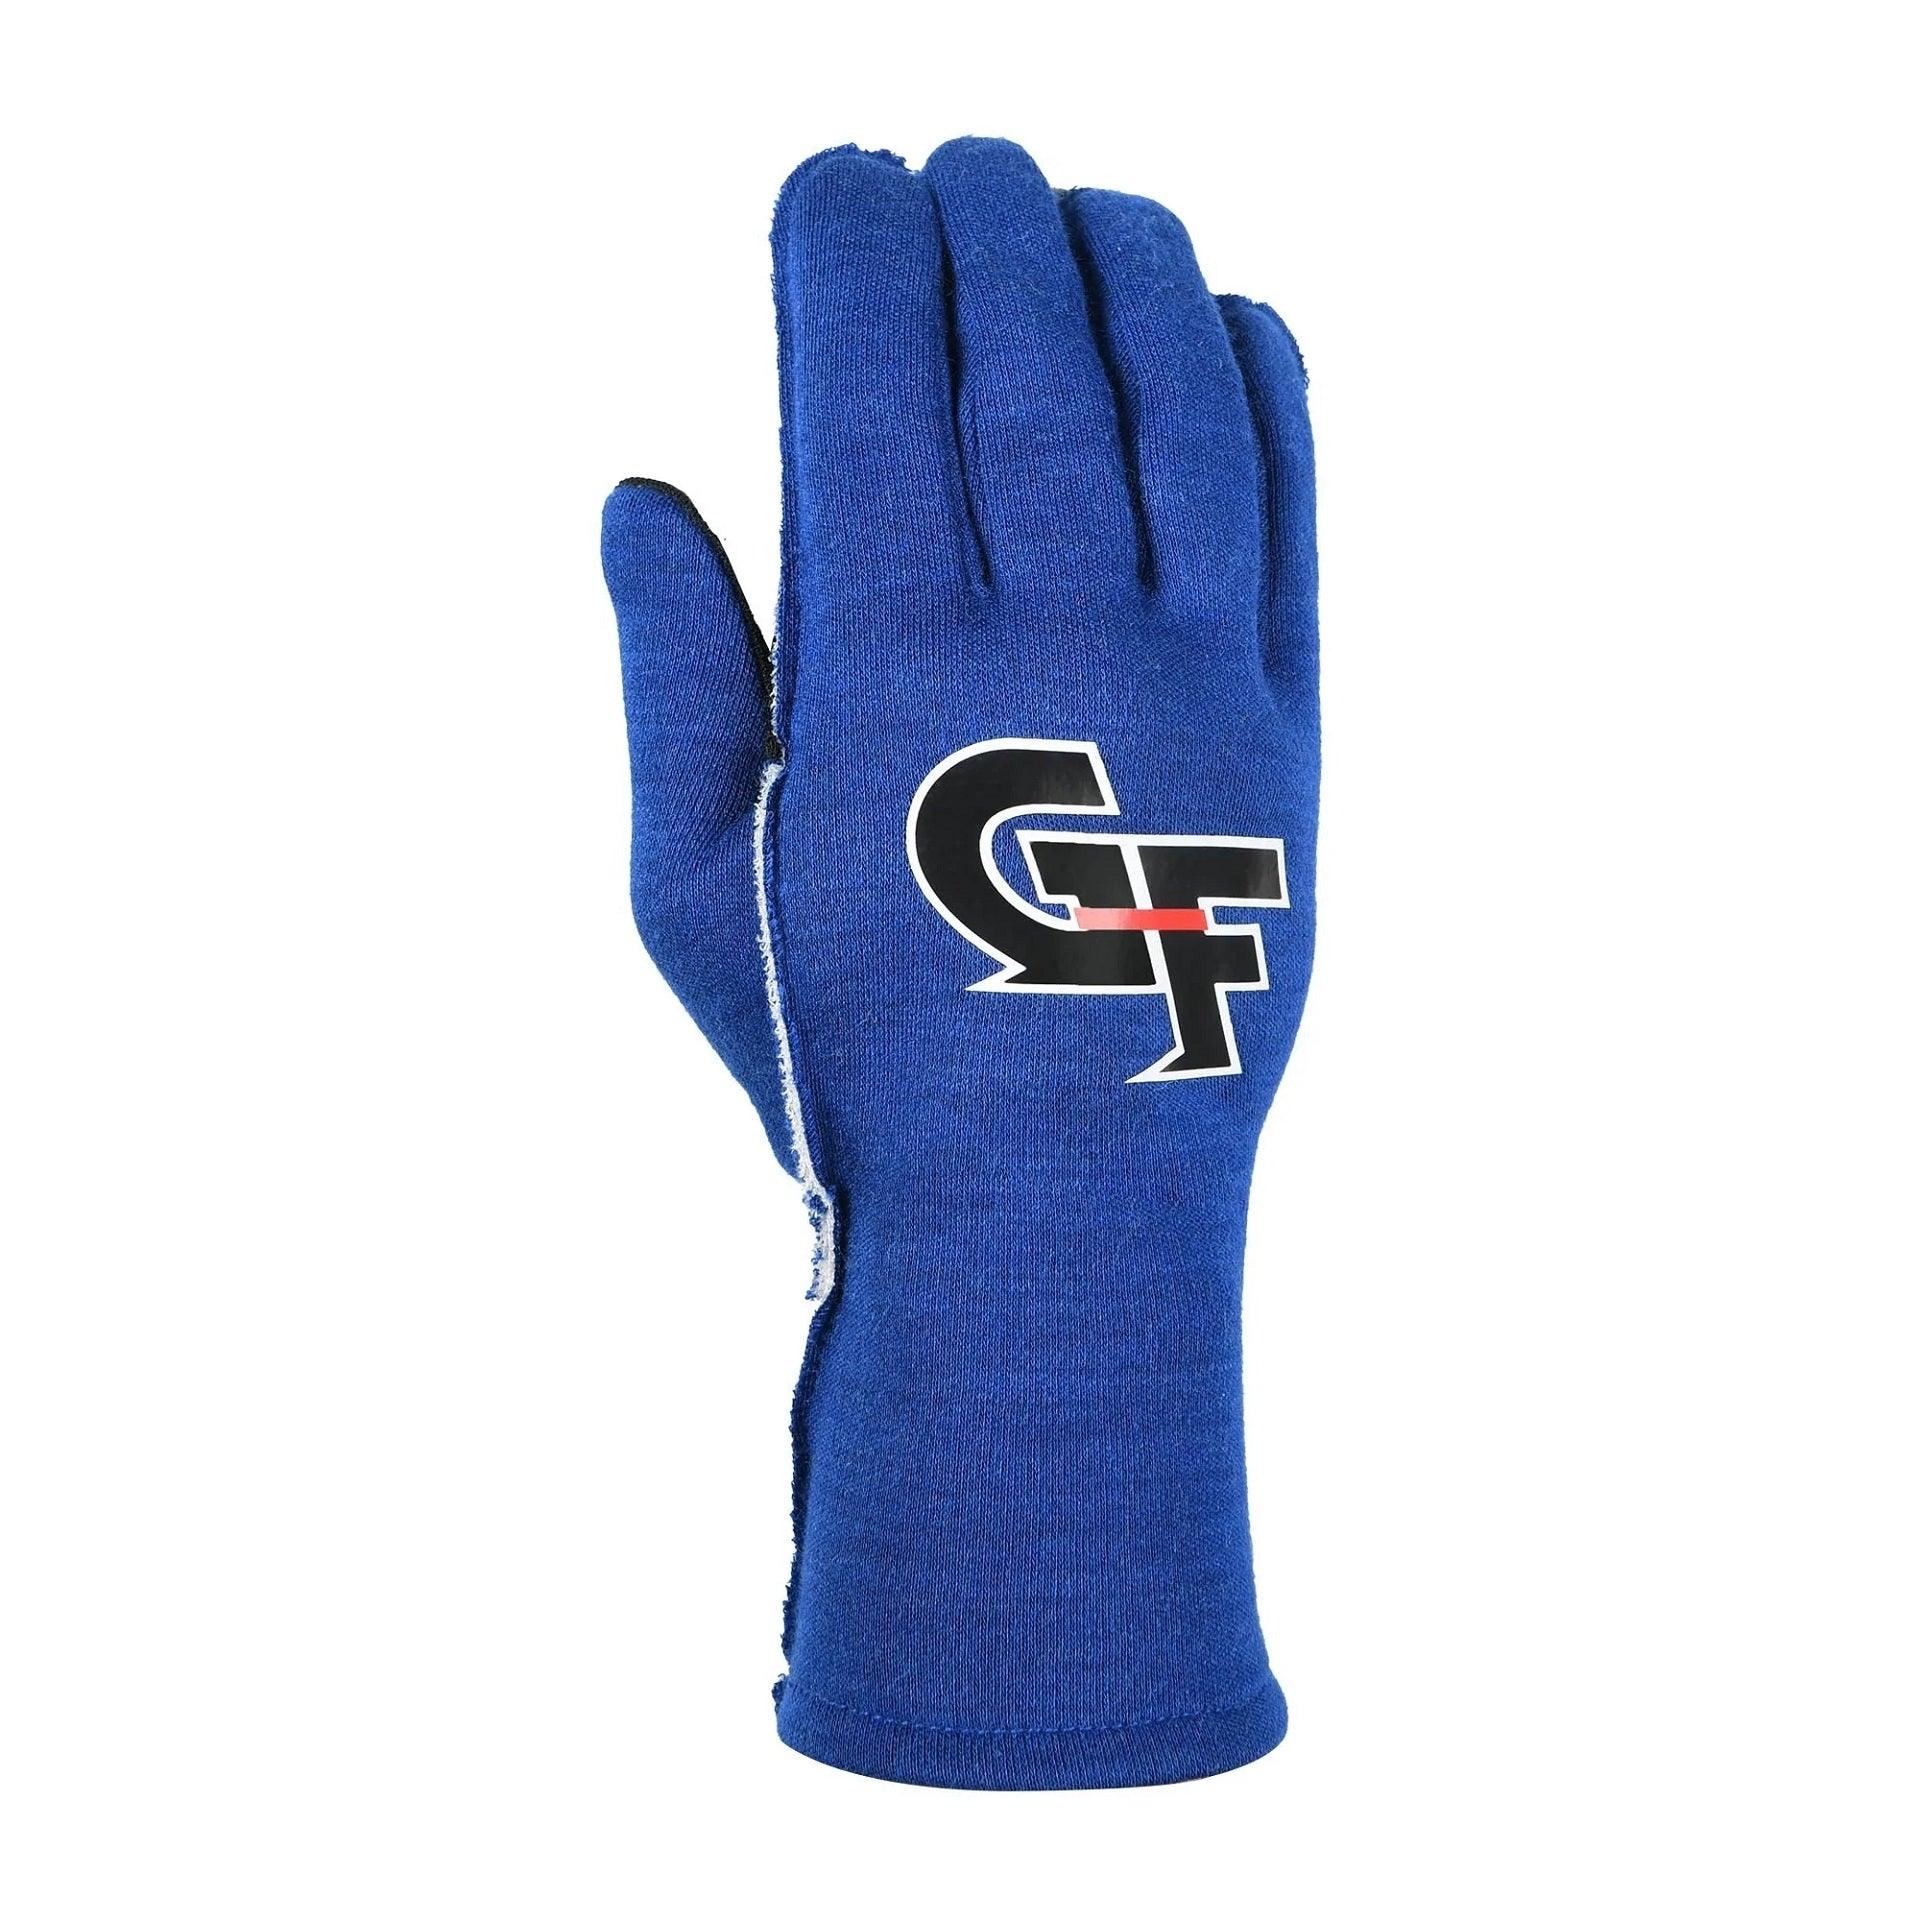 Gloves G-Limit Large Blue - Burlile Performance Products